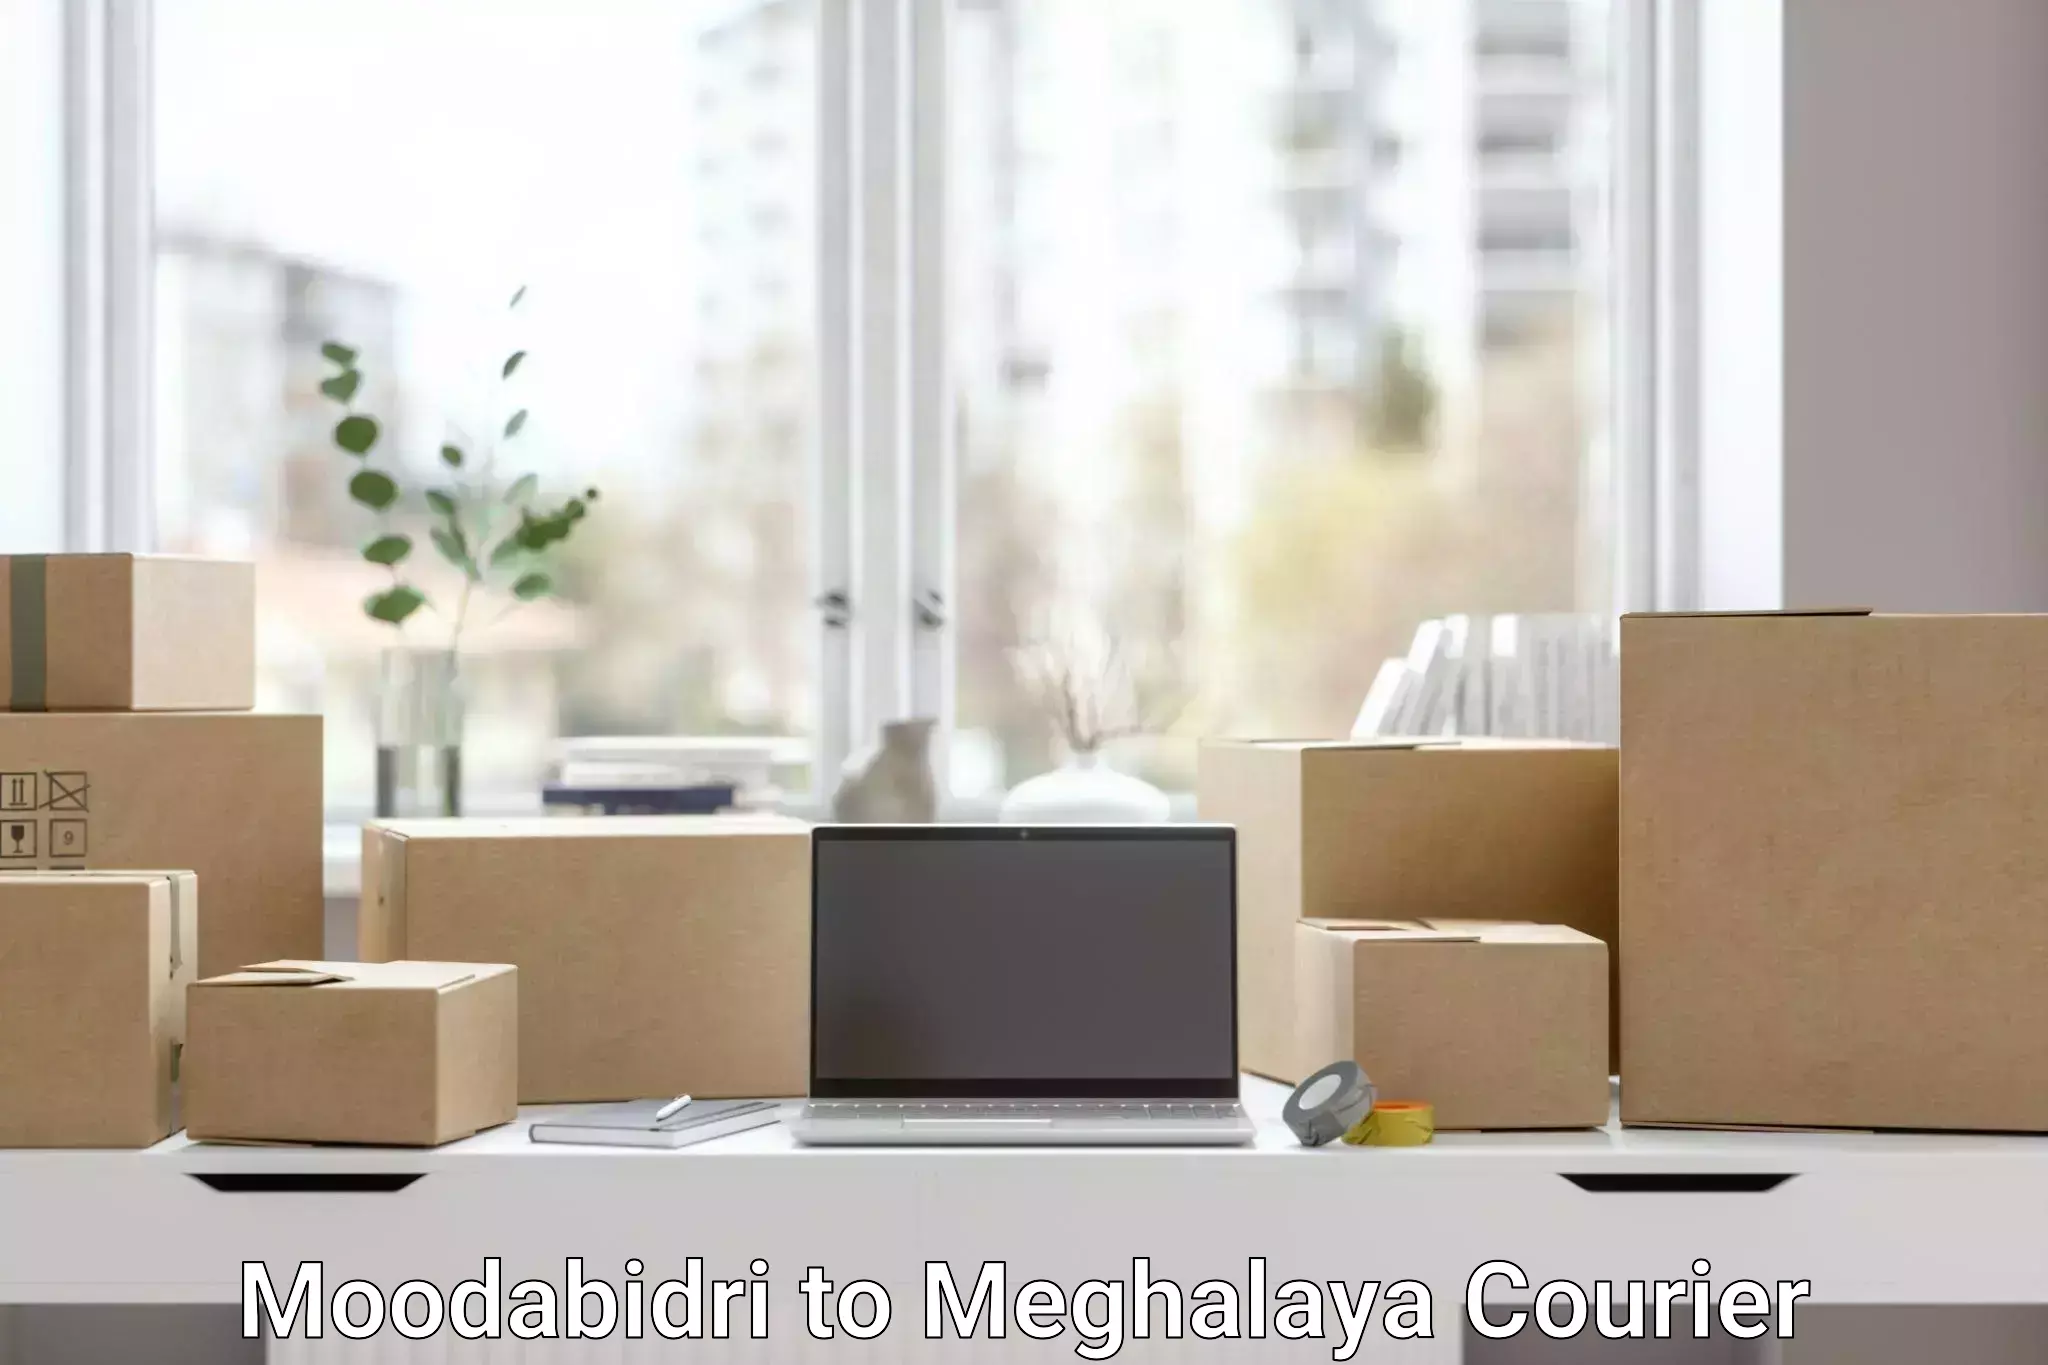 Package forwarding in Moodabidri to Jowai